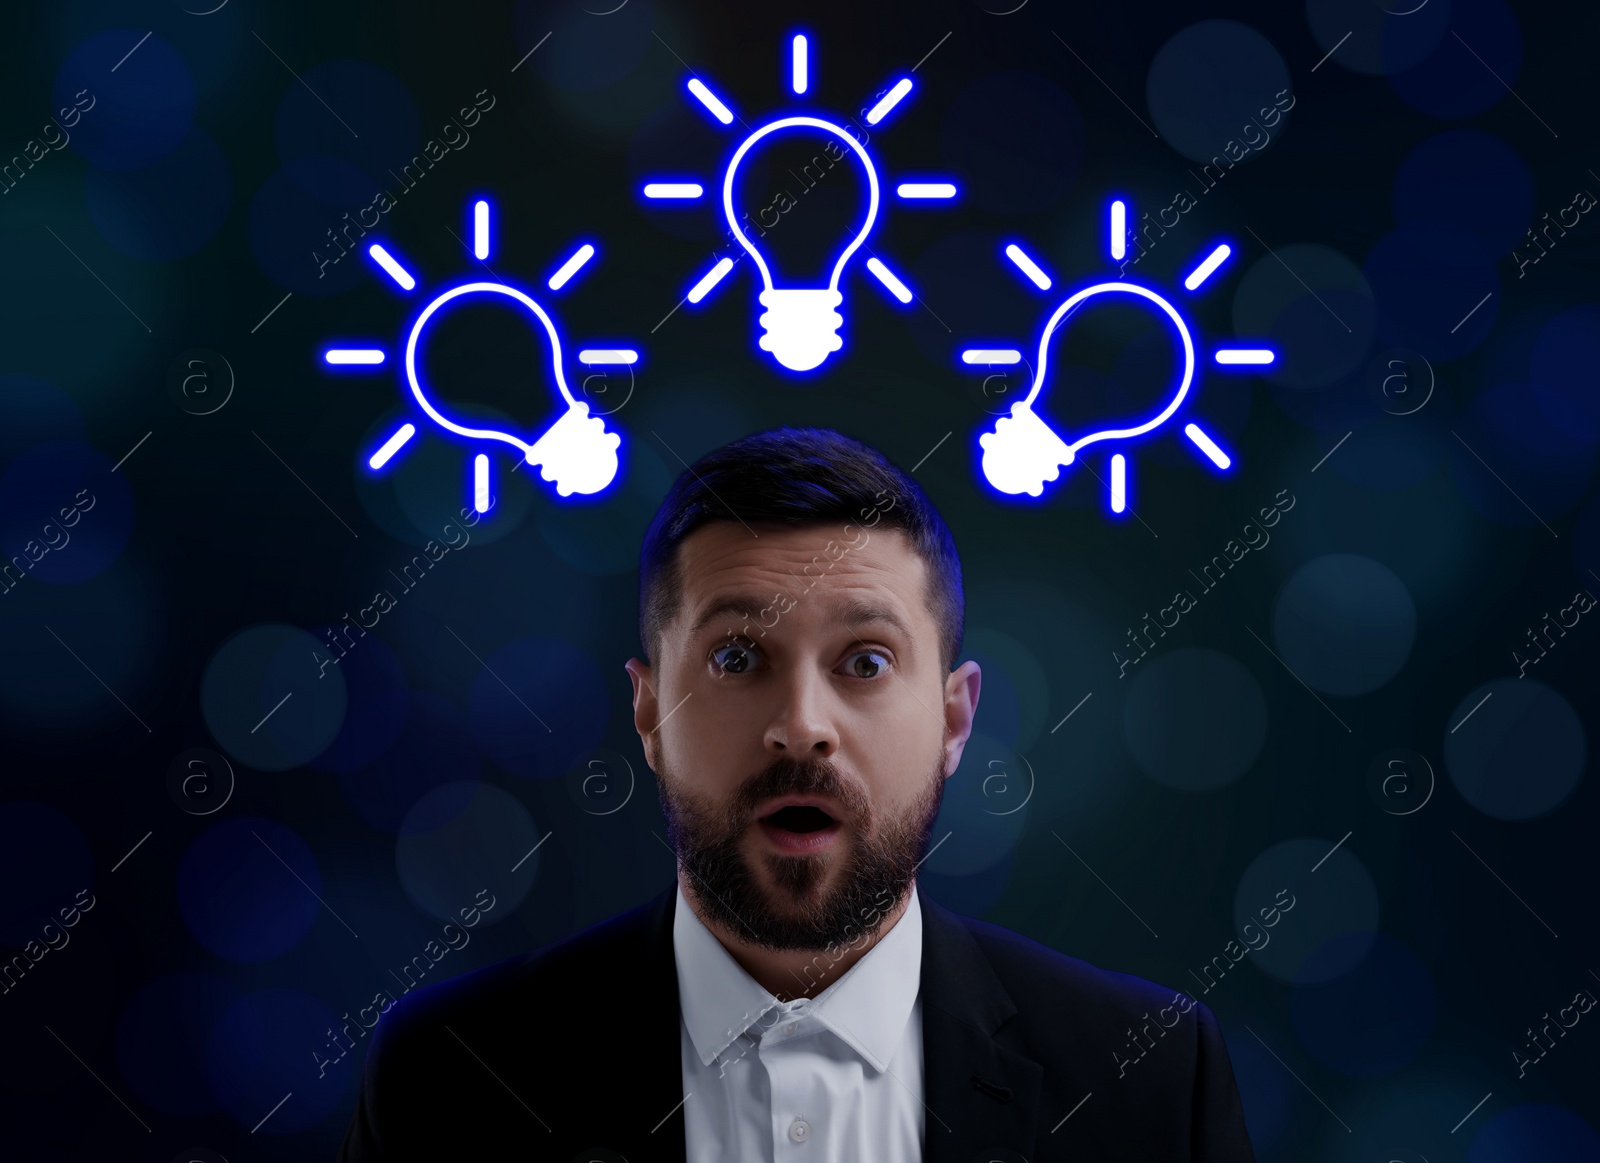 Image of Idea generation. Man on dark background. Illustrations of light bulb over him